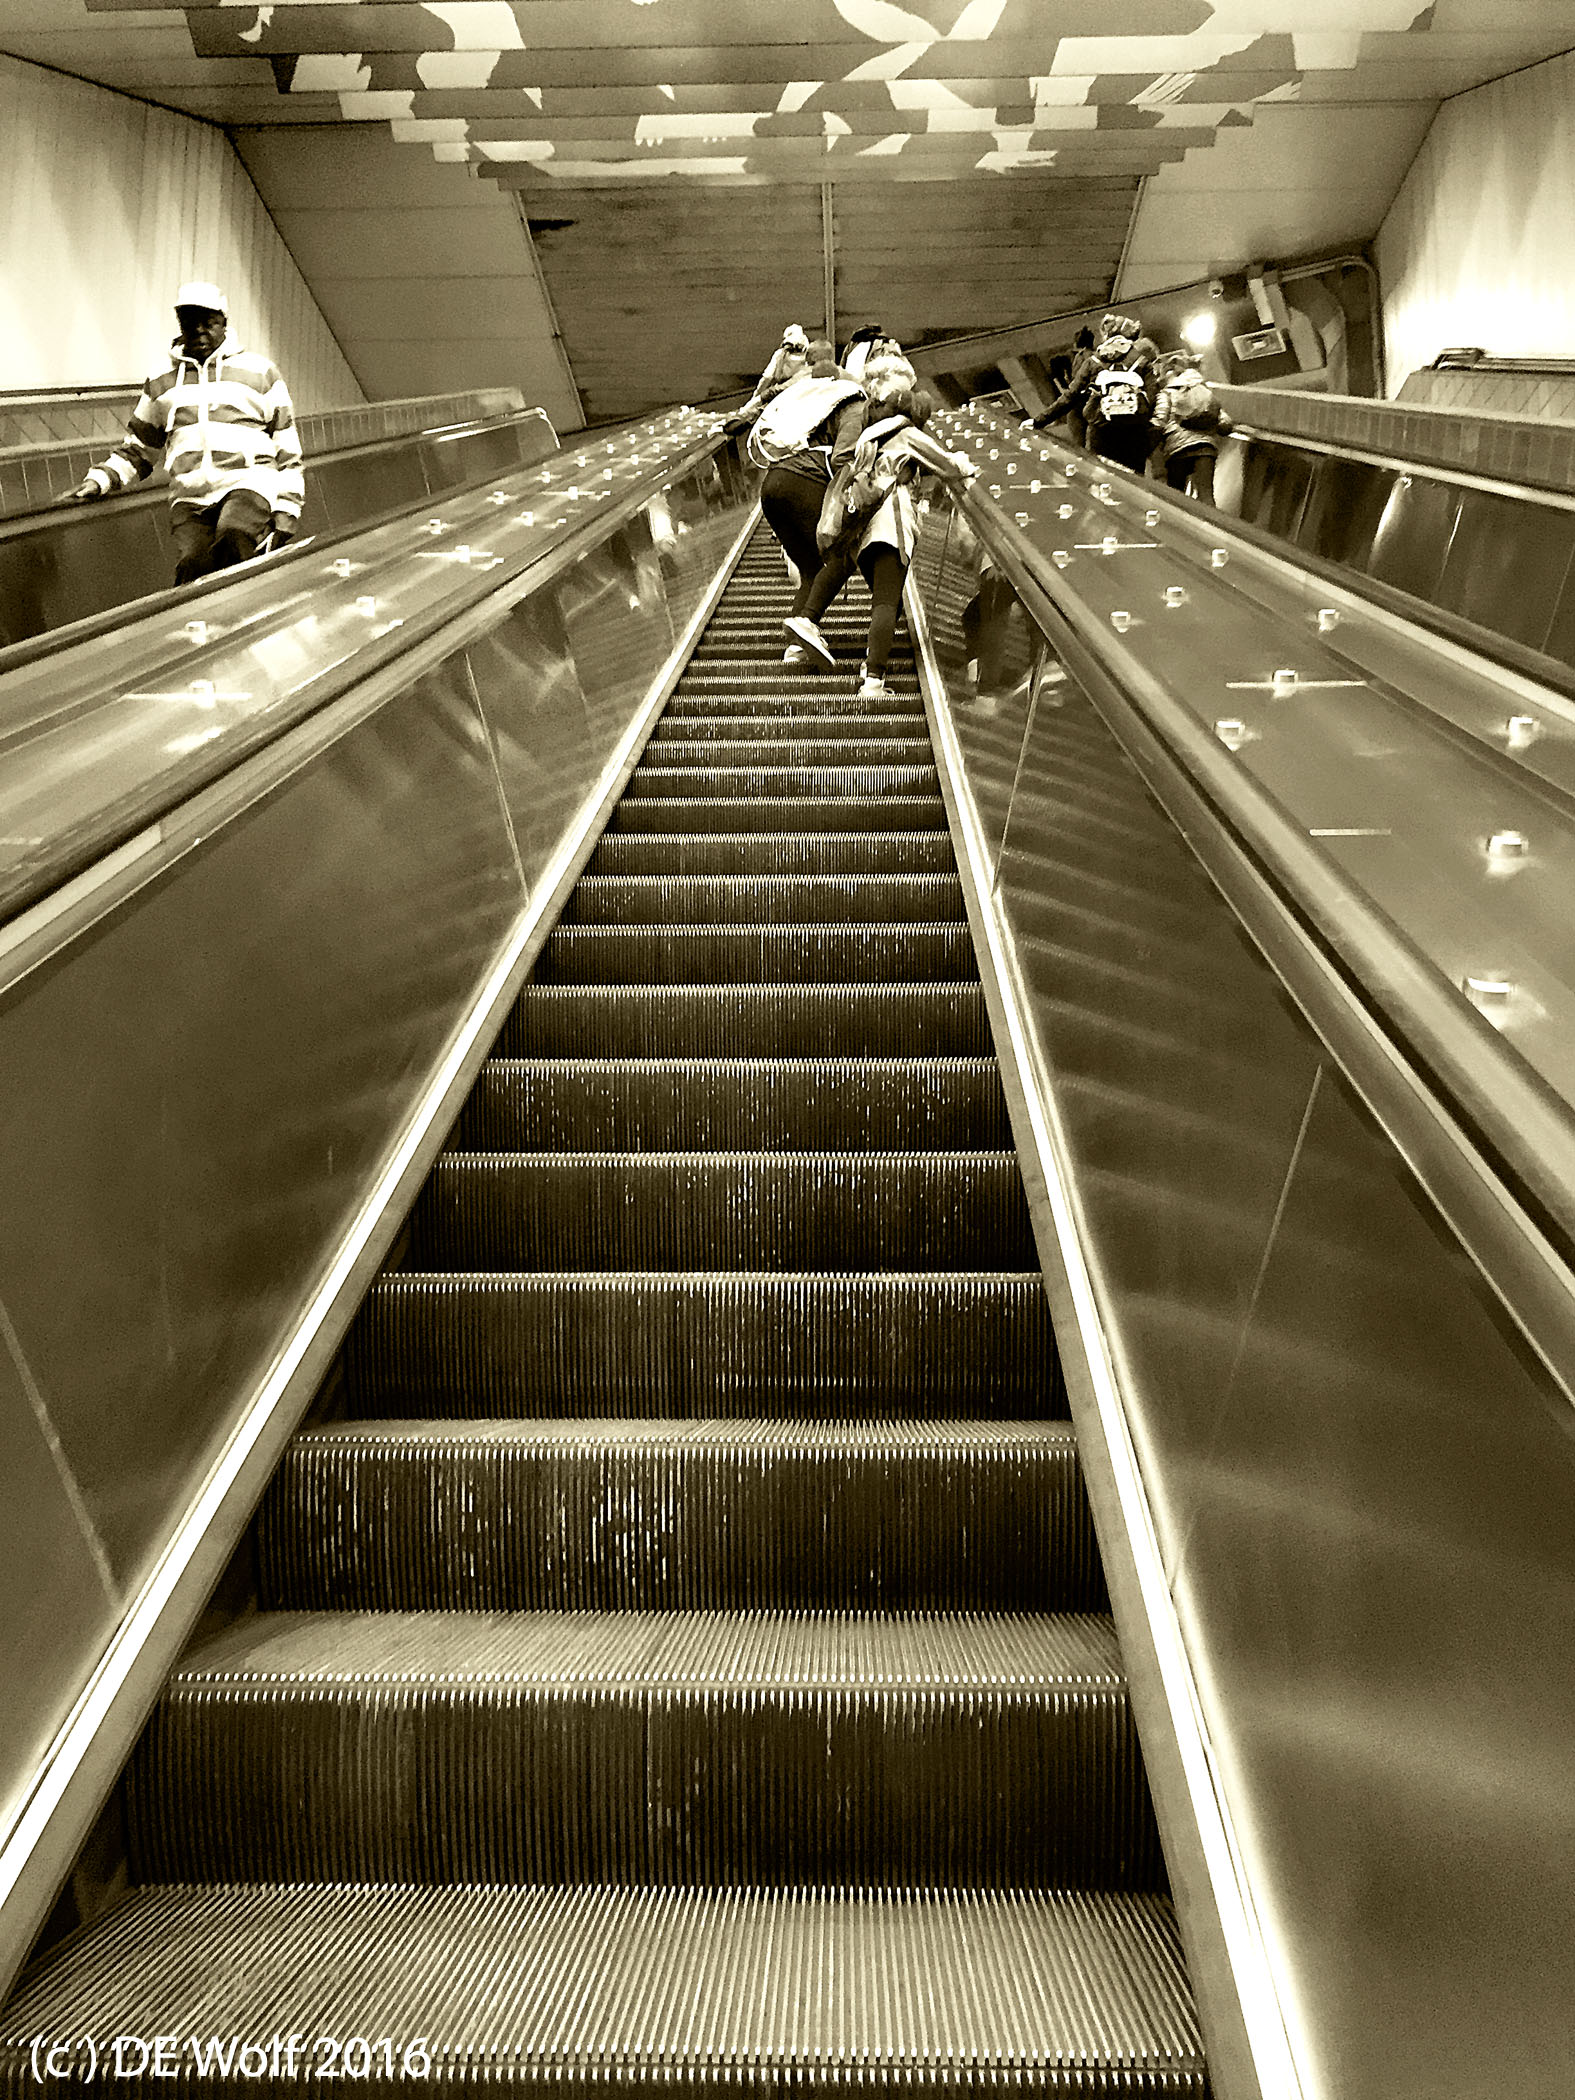 The up escalator